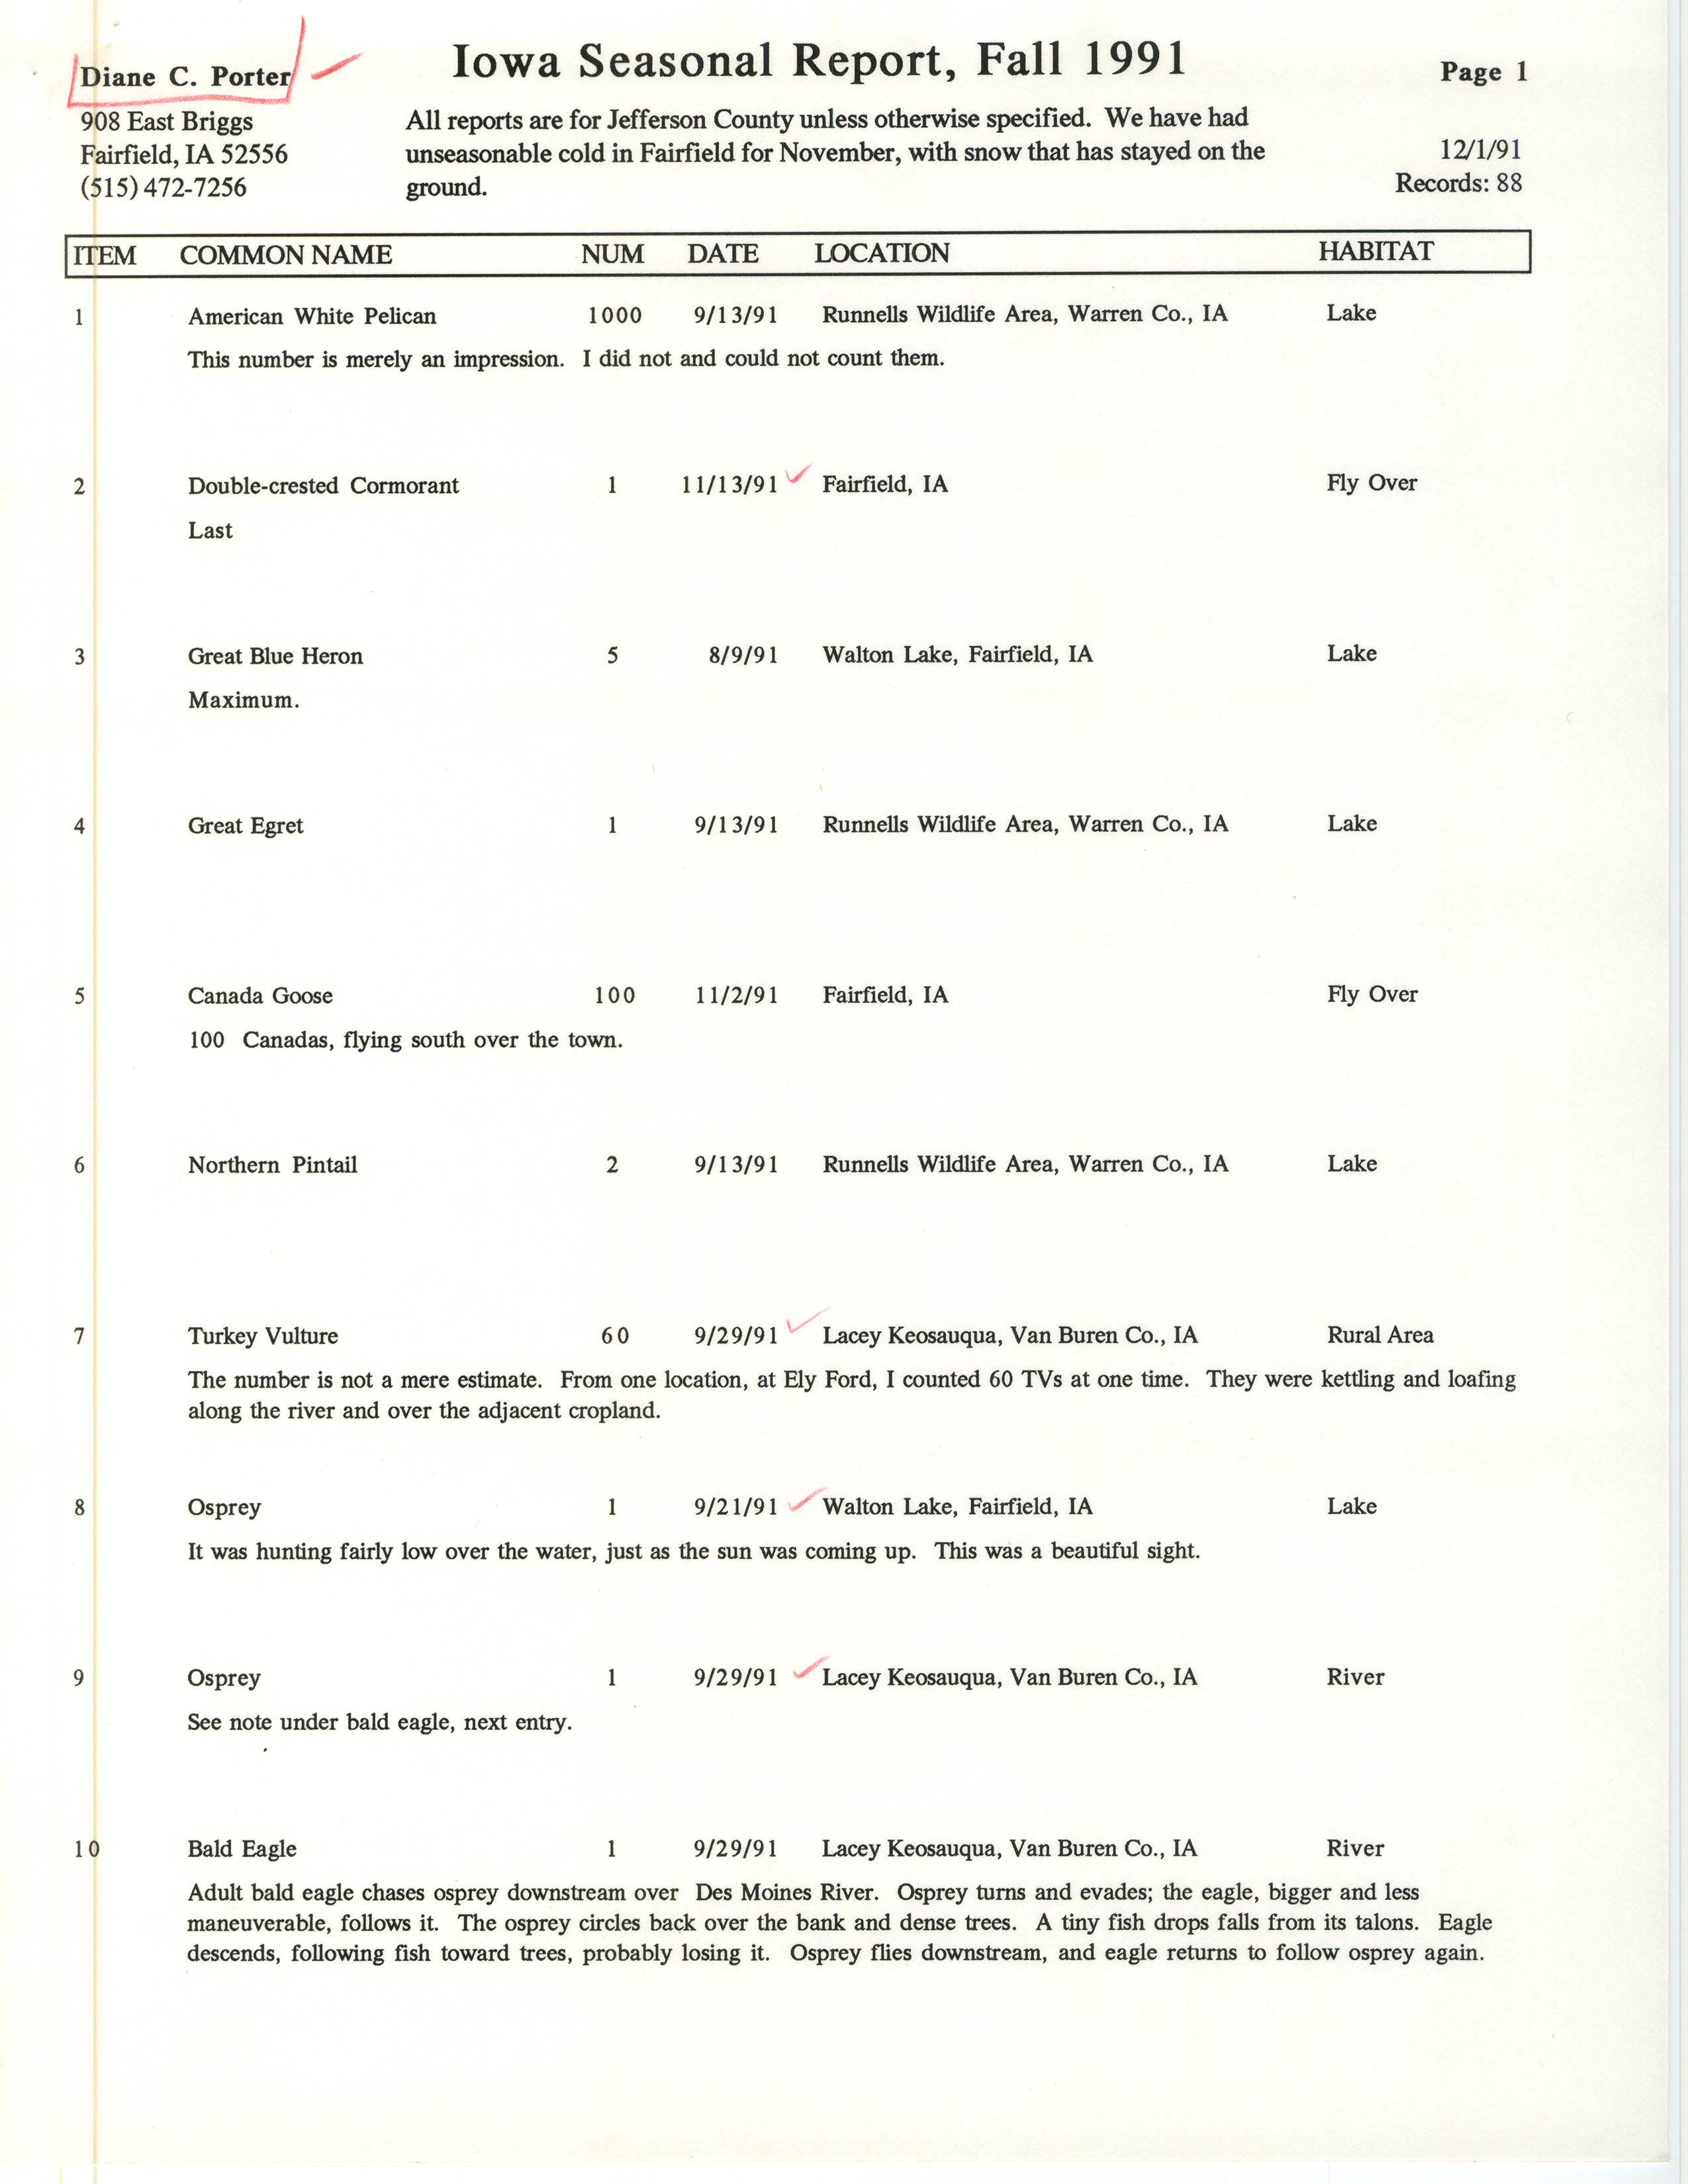 Iowa seasonal report, fall 1991, contributed by Diane C. Porter, December 1, 1991